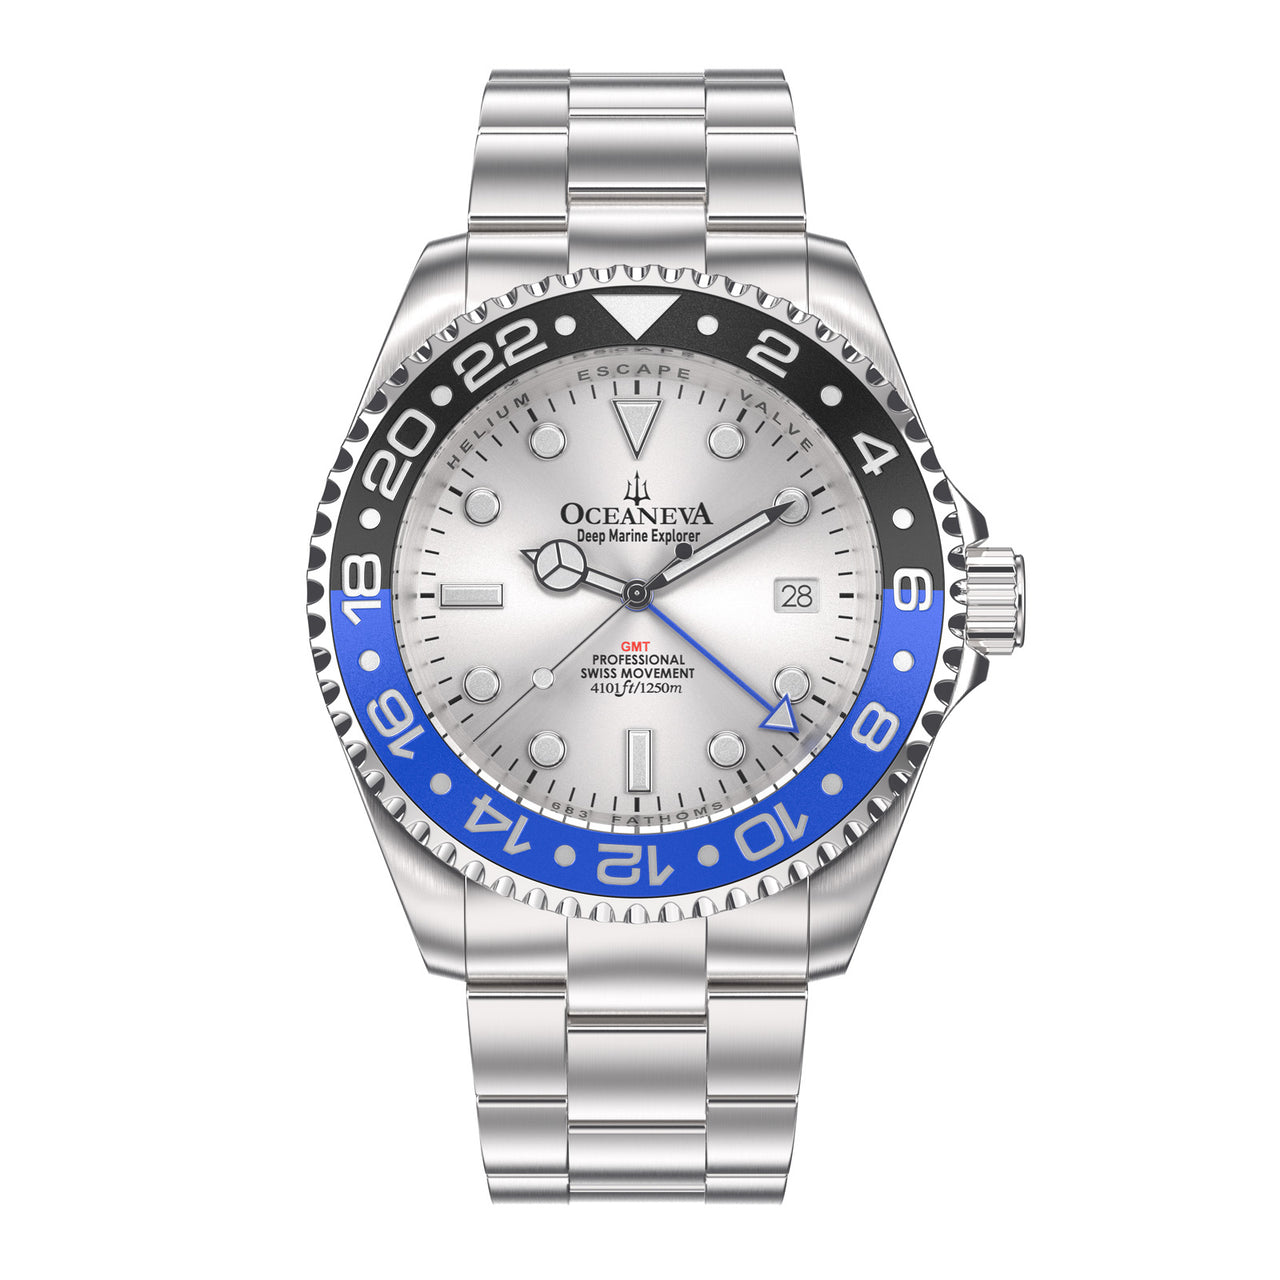 Oceaneva™ Men's GMT Deep Marine Explorer 1250M Pro Diver Watch Blue Black Silver Dial